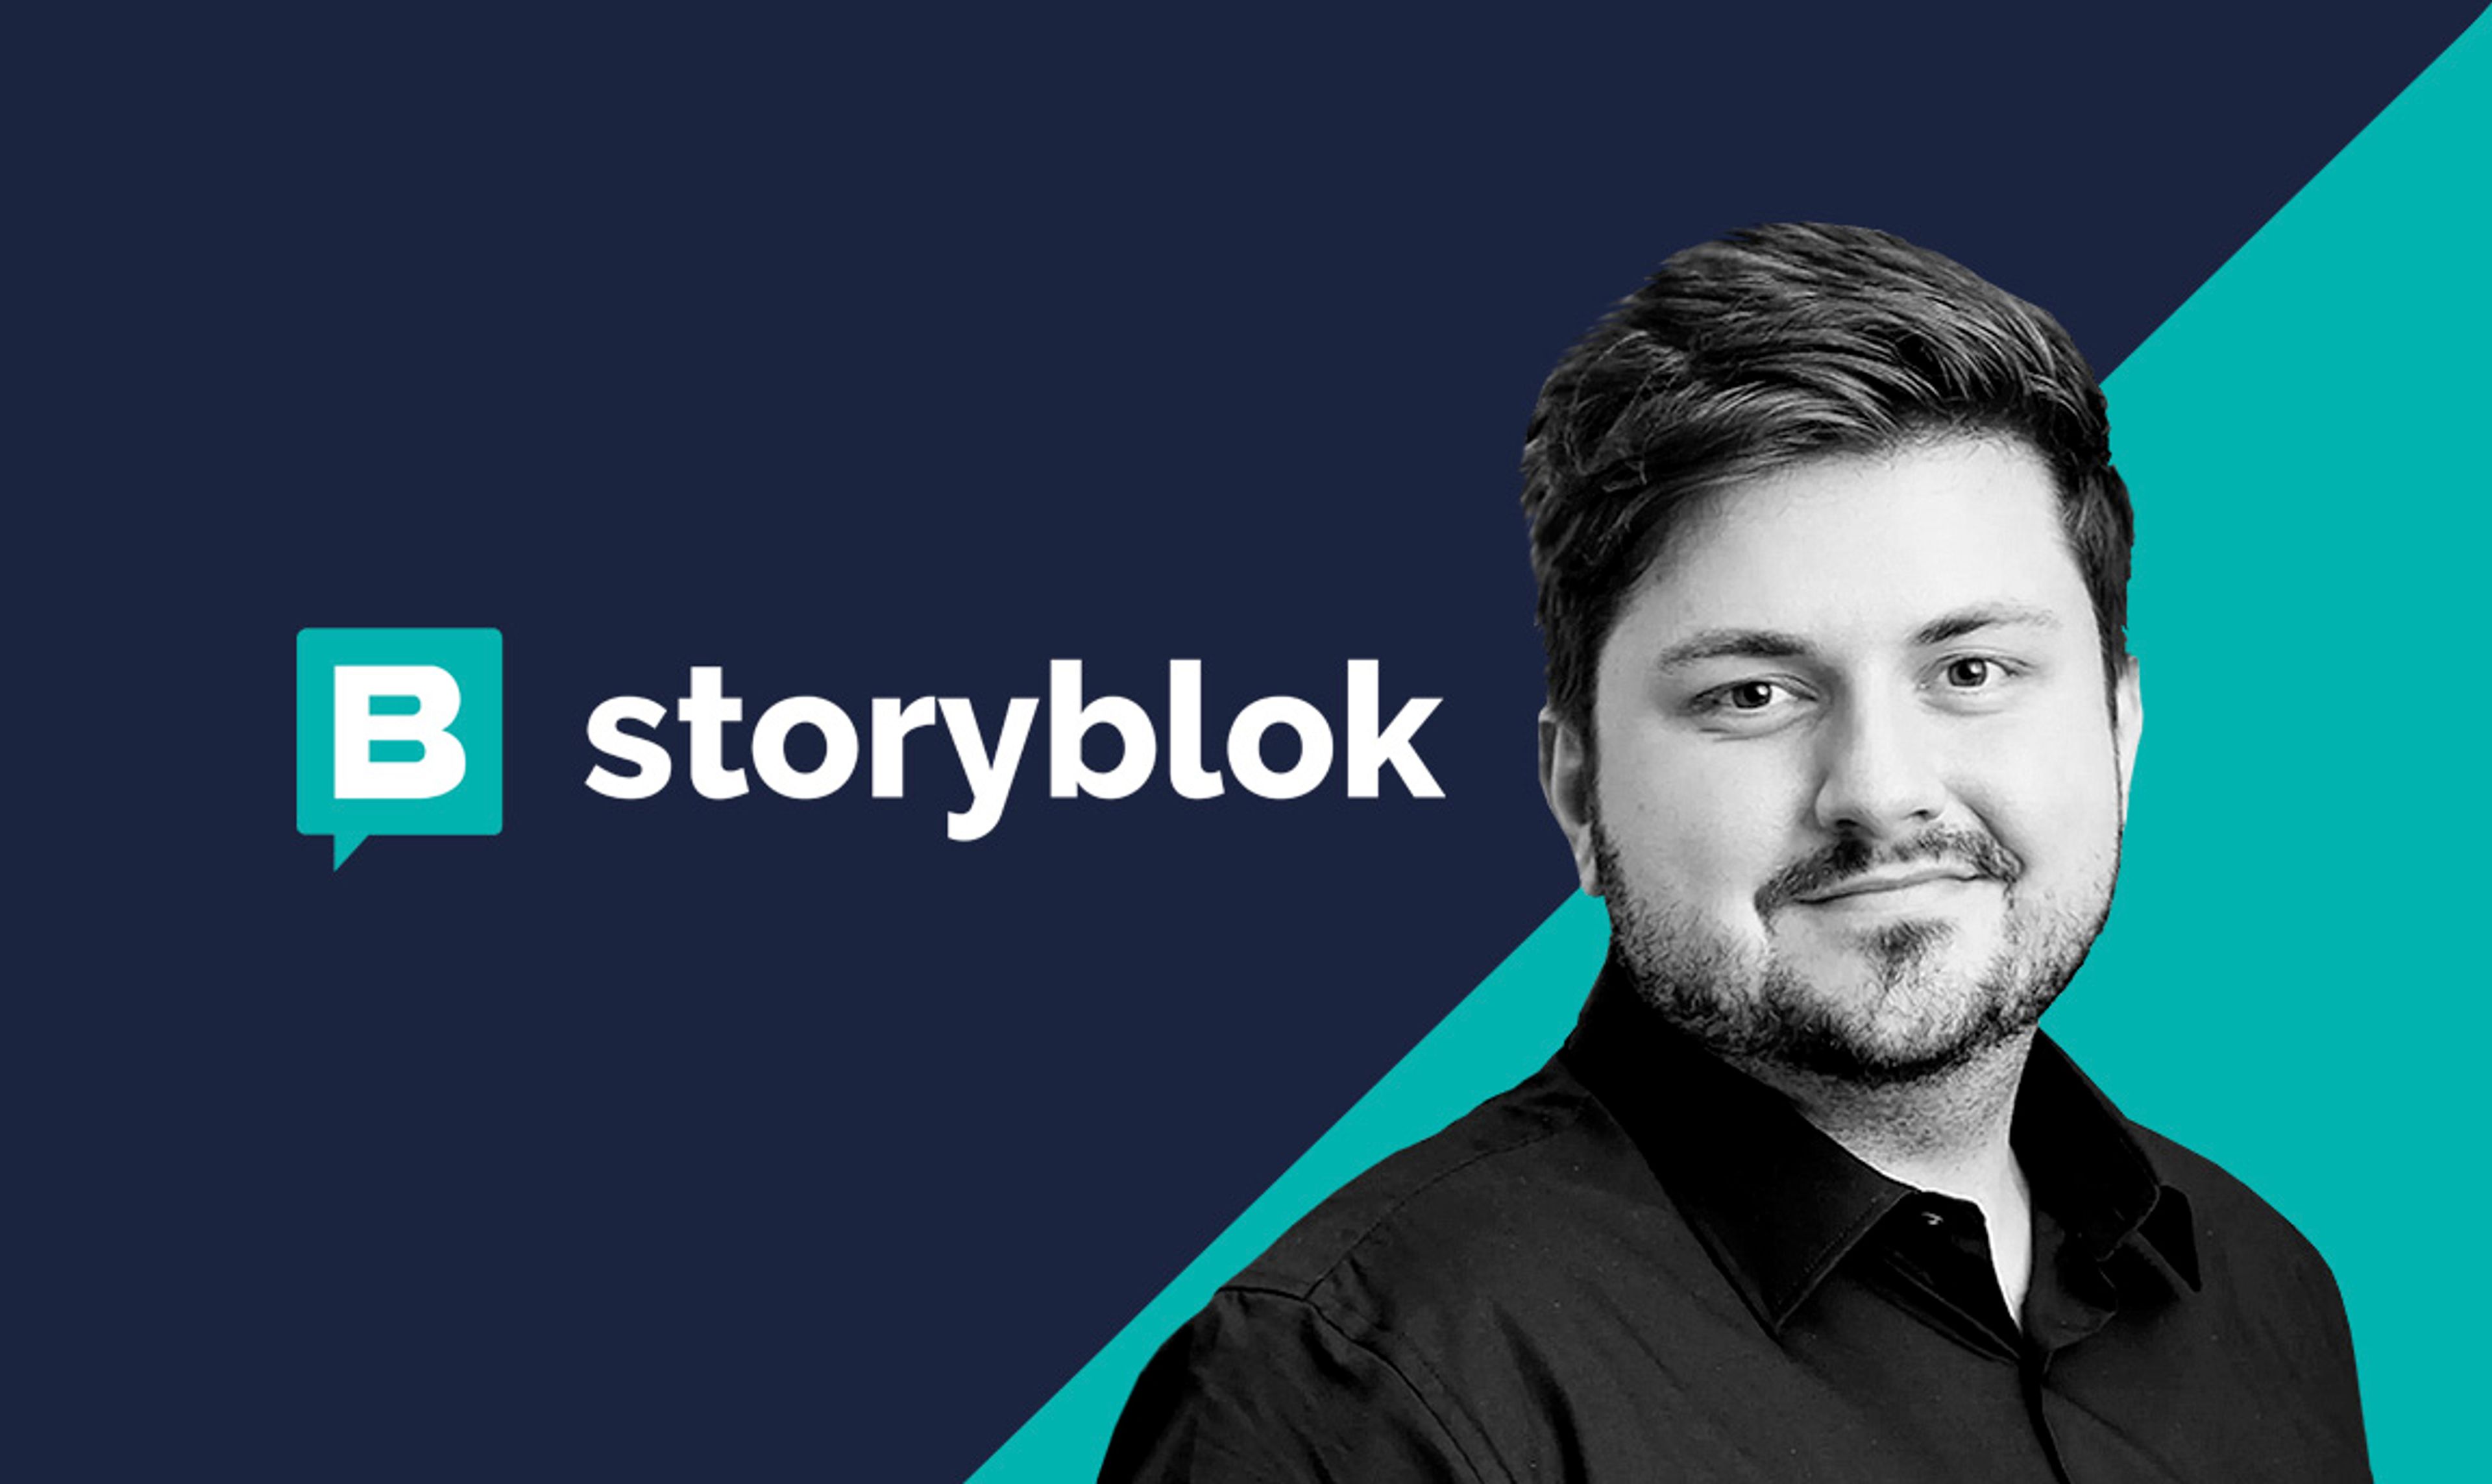 Storyblok logo and headshot of Dominik Angerer, CEO